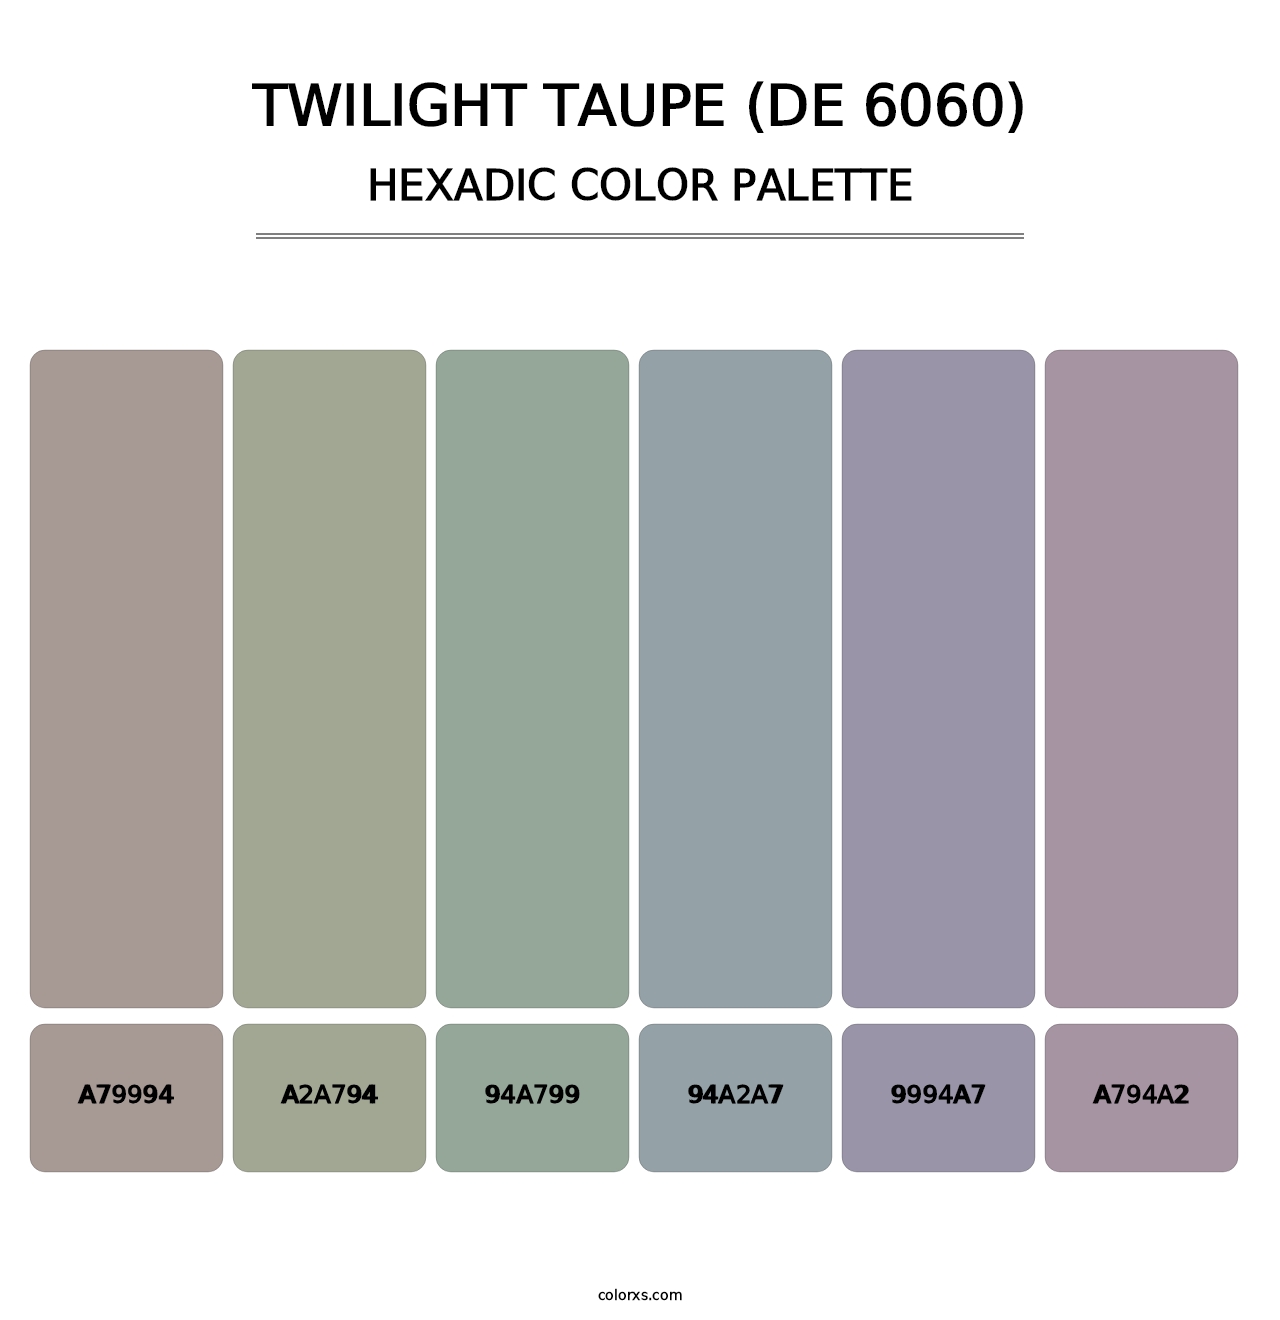 Twilight Taupe (DE 6060) - Hexadic Color Palette